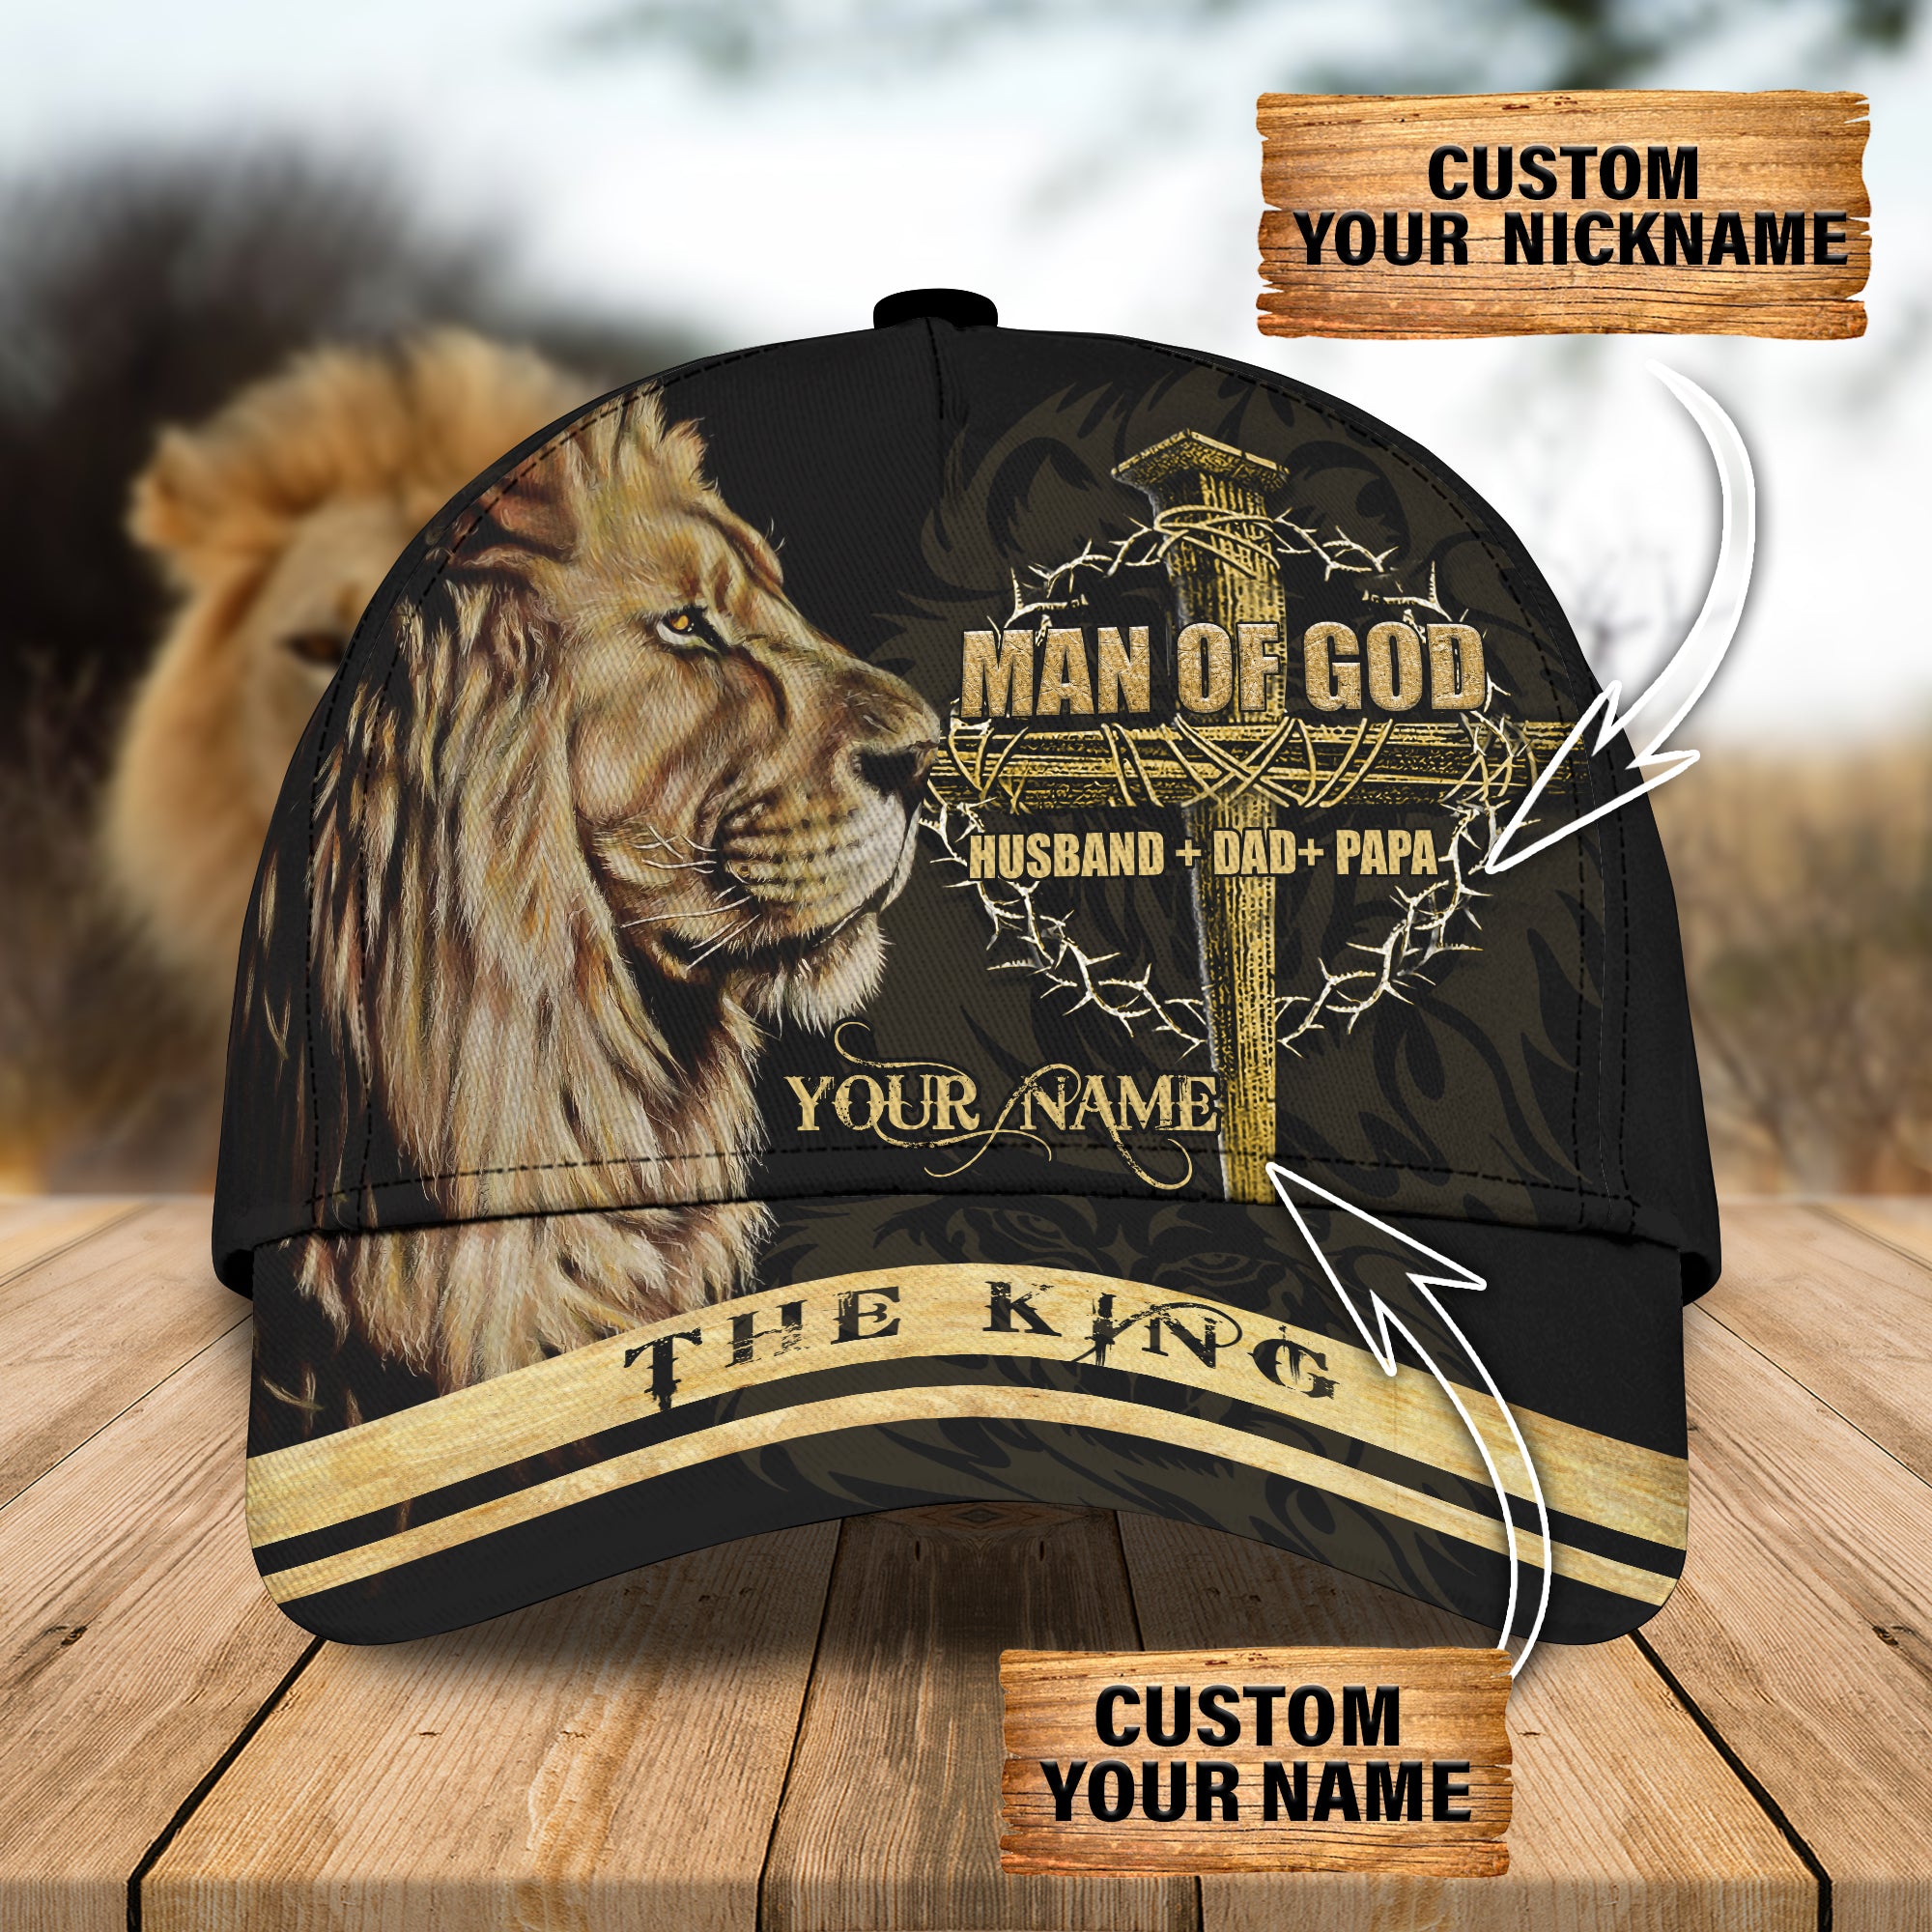 Man Of God - Personalized Name Cap 17 - Bhn97 5